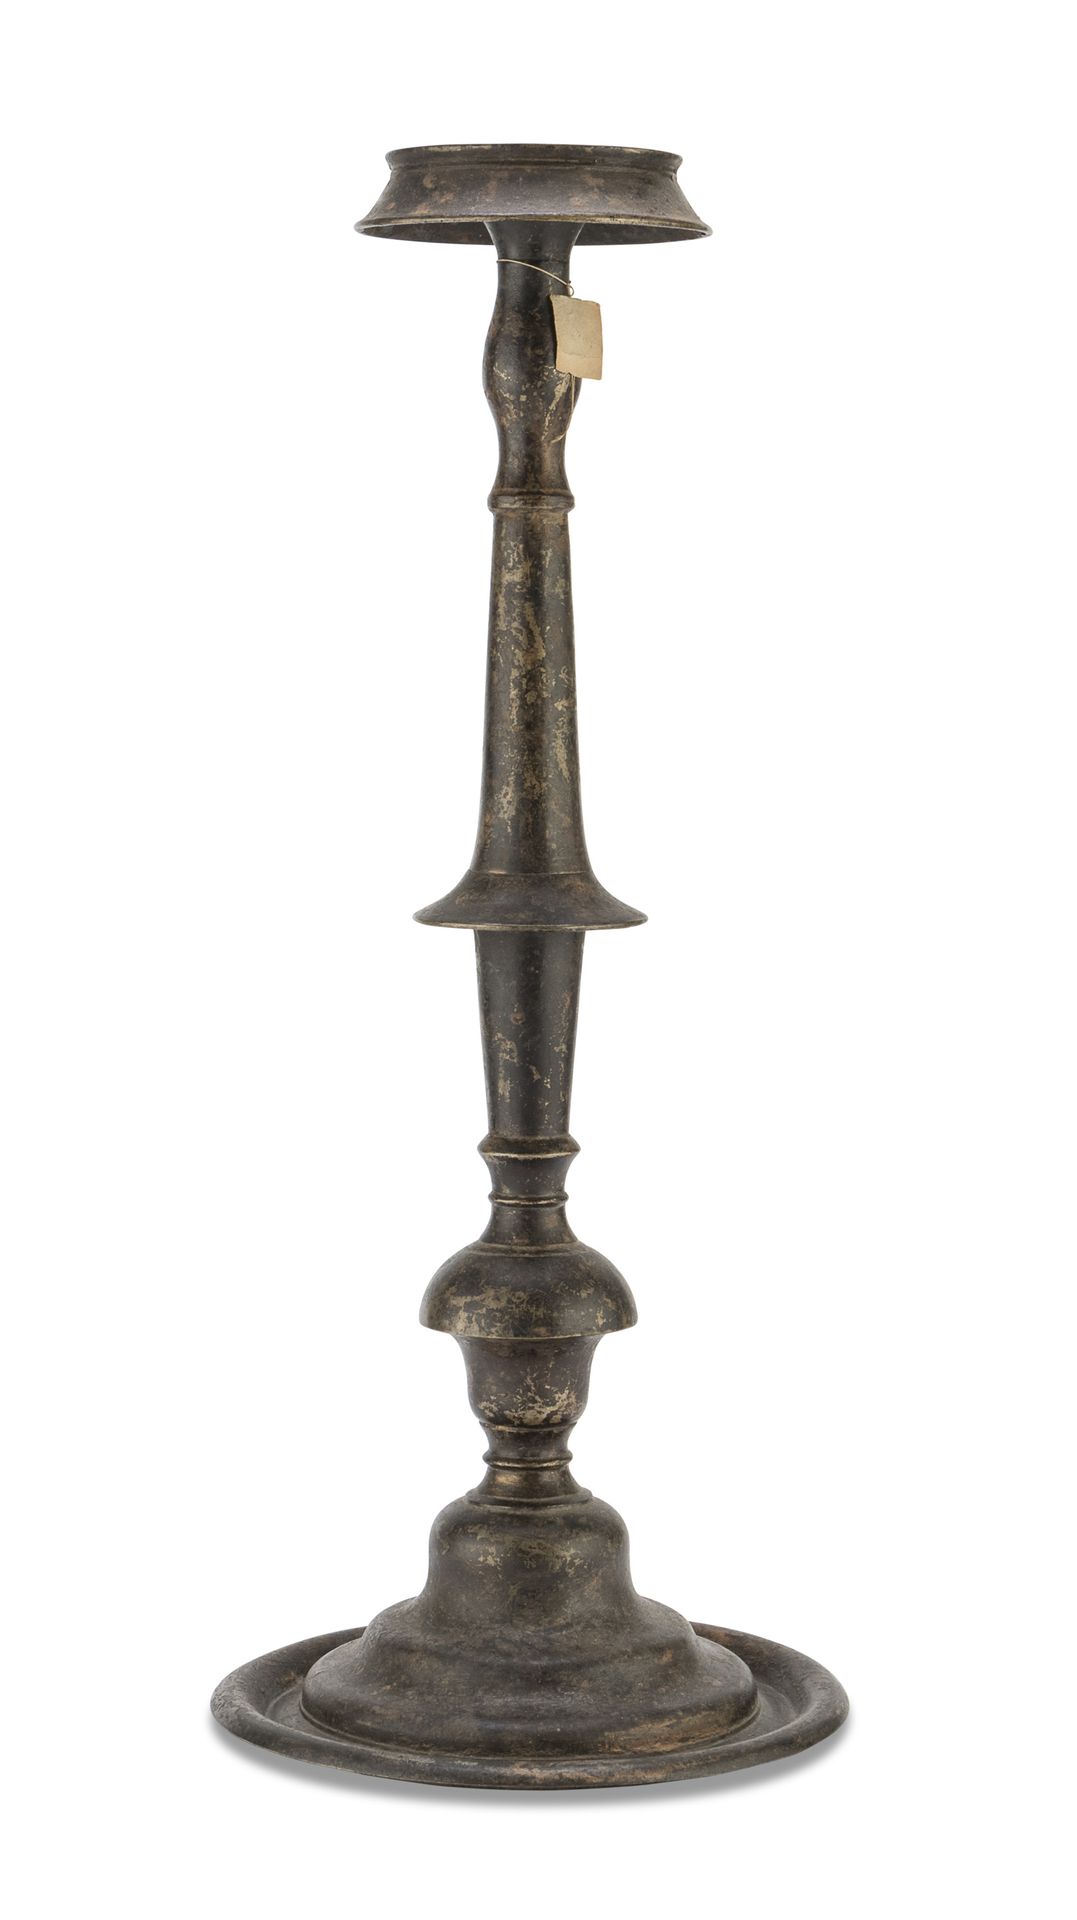 Null 漆面金属烛台，19世纪

有钟形茎和圆盘脚。

尺寸为49 x 20厘米。